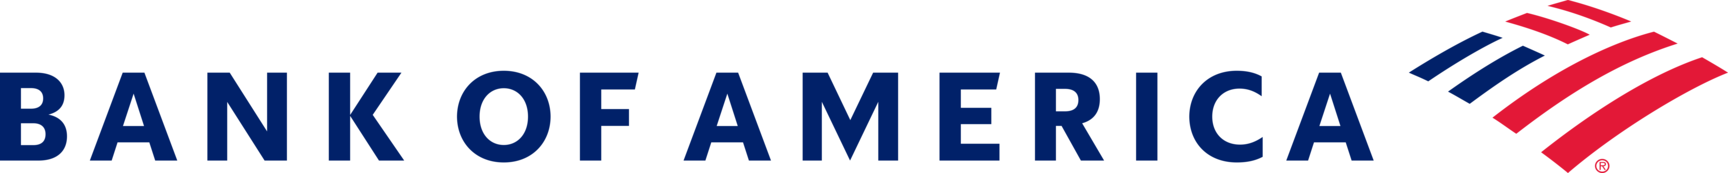 logo for Bank of America